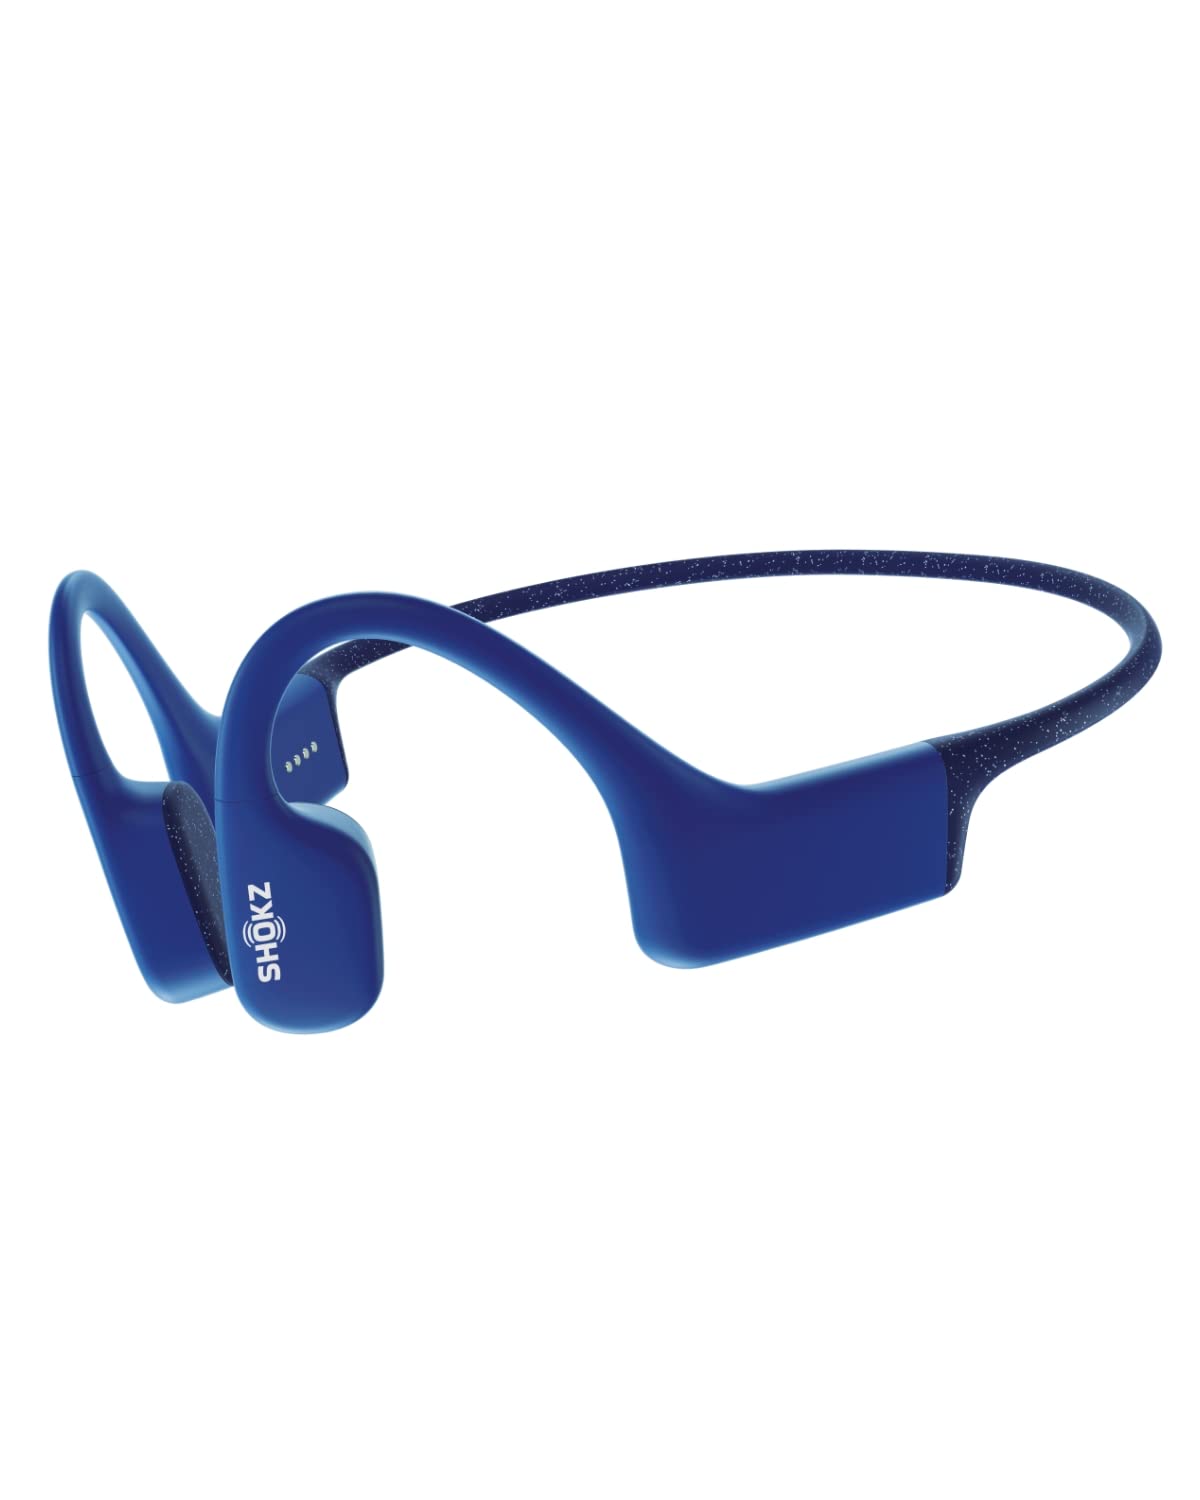 SHOKZ OpenSwim - 水泳用骨伝導 MP3 防水ヘッドフォン - オープンイヤーワイヤレスヘッドフォン、ノーズクリップと耳栓付き (ブルー)